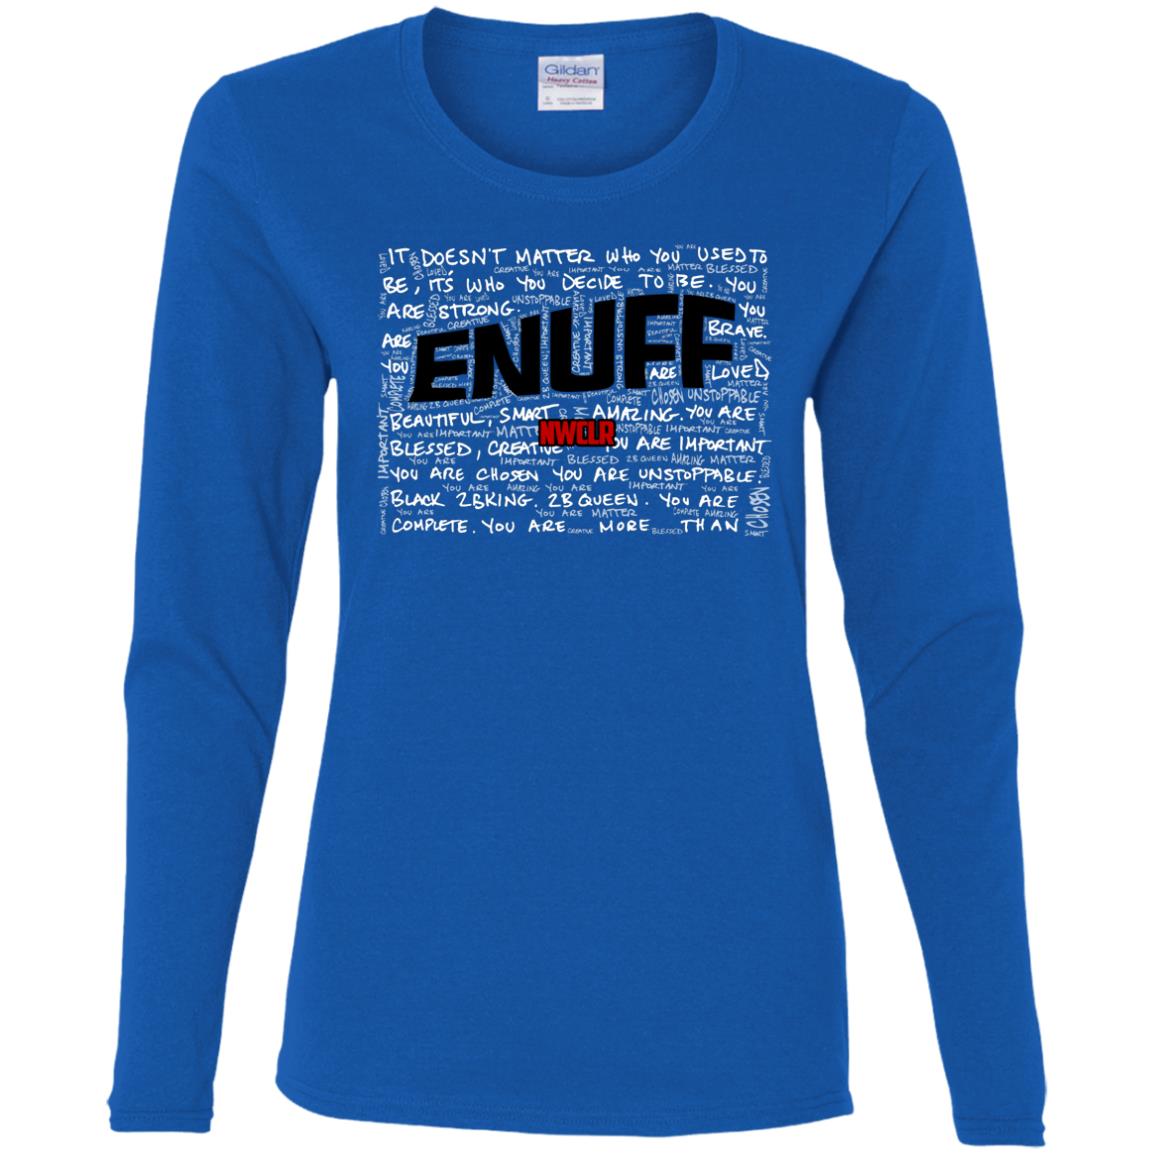 I'M ENUFF  Ladies' Cotton LS T-Shirt